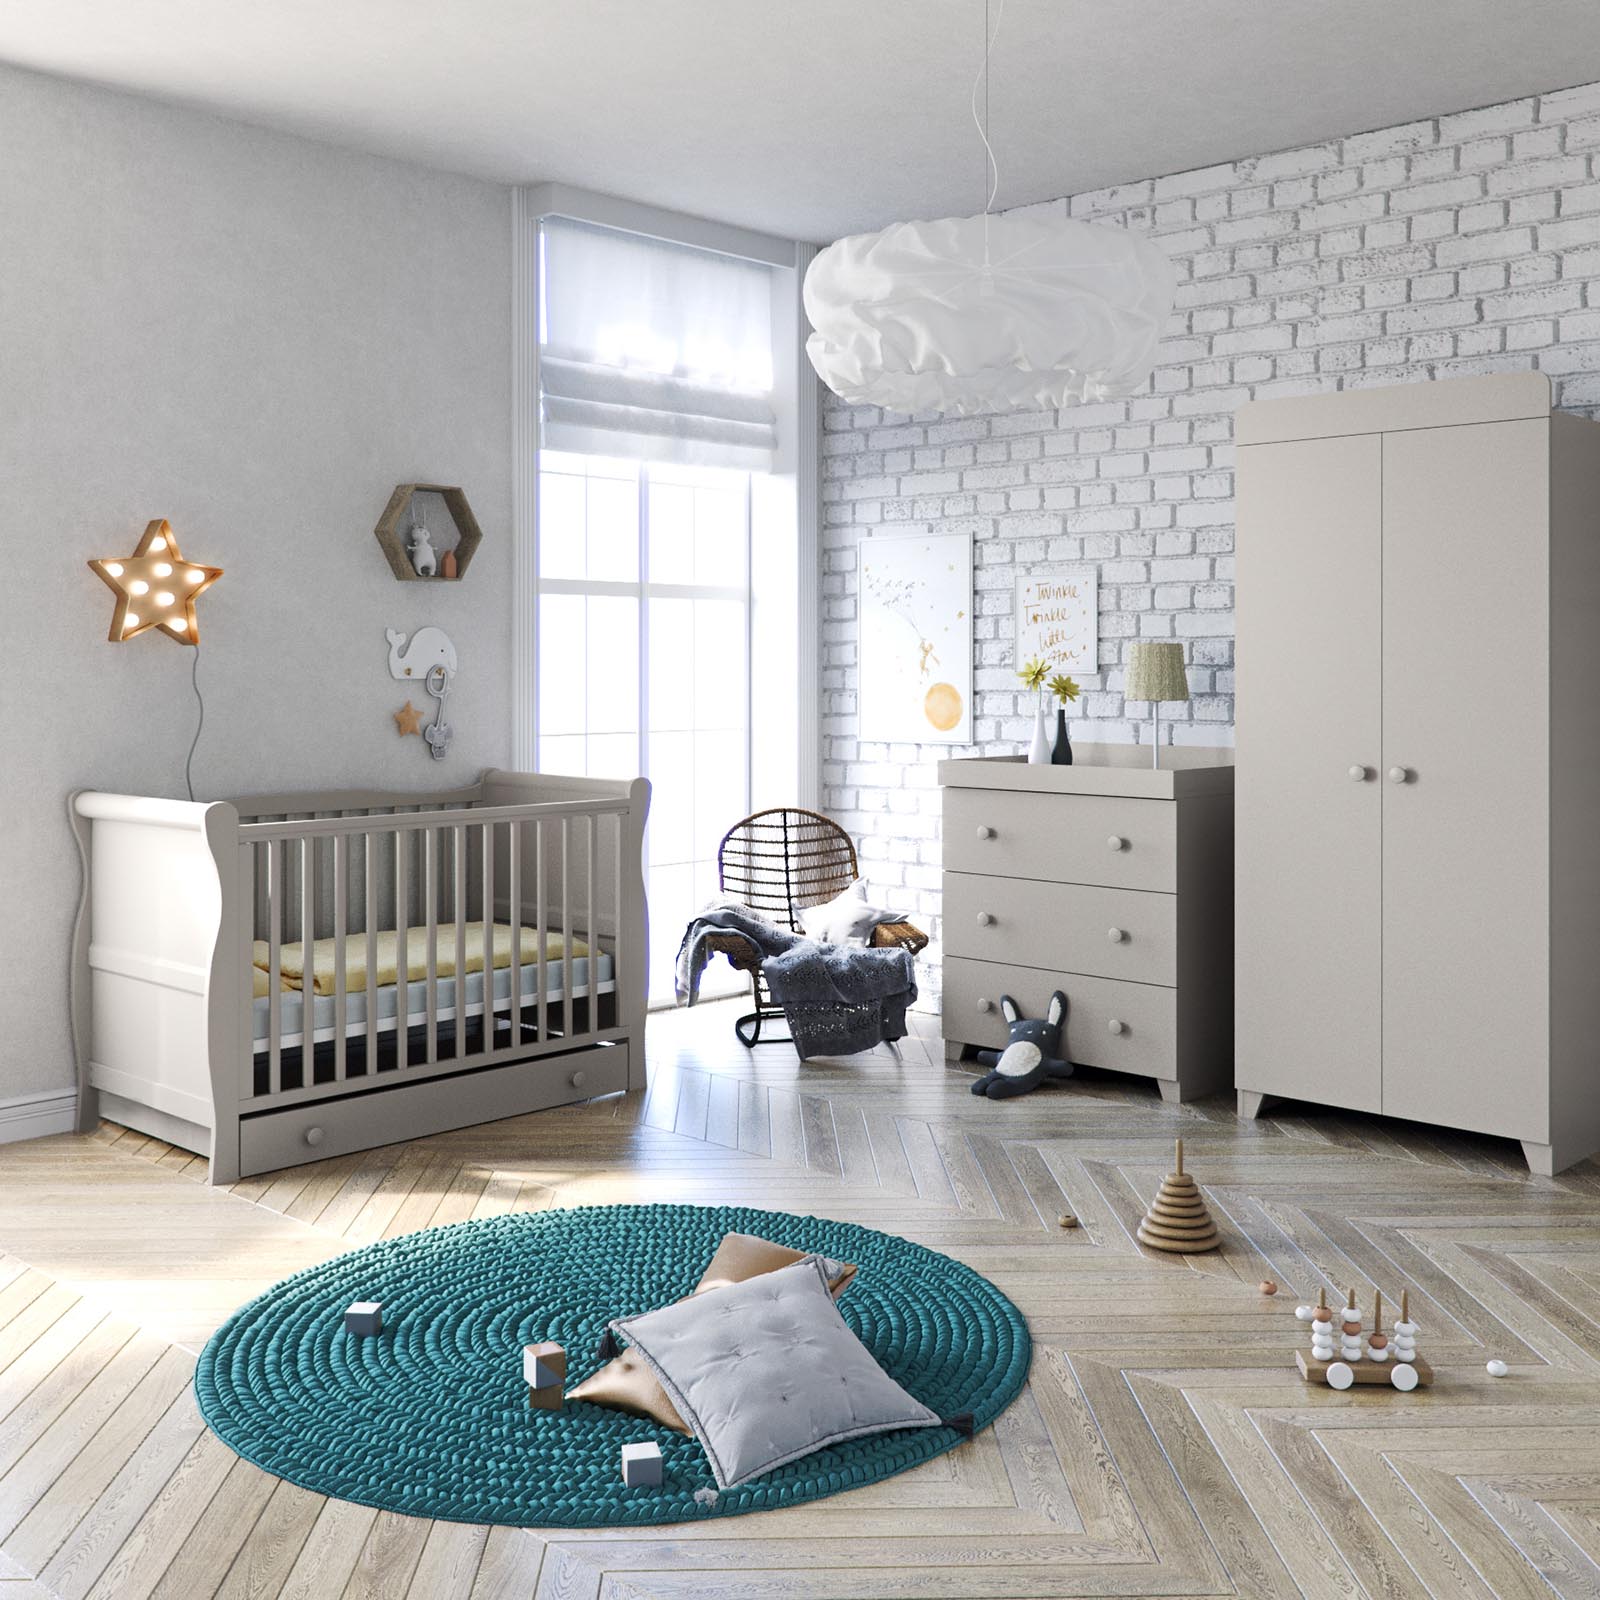 Little Acorns Sleigh Cot Bed 6 Piece Nursery Furniture Set With Maxi Air Cool Mattress - Grey